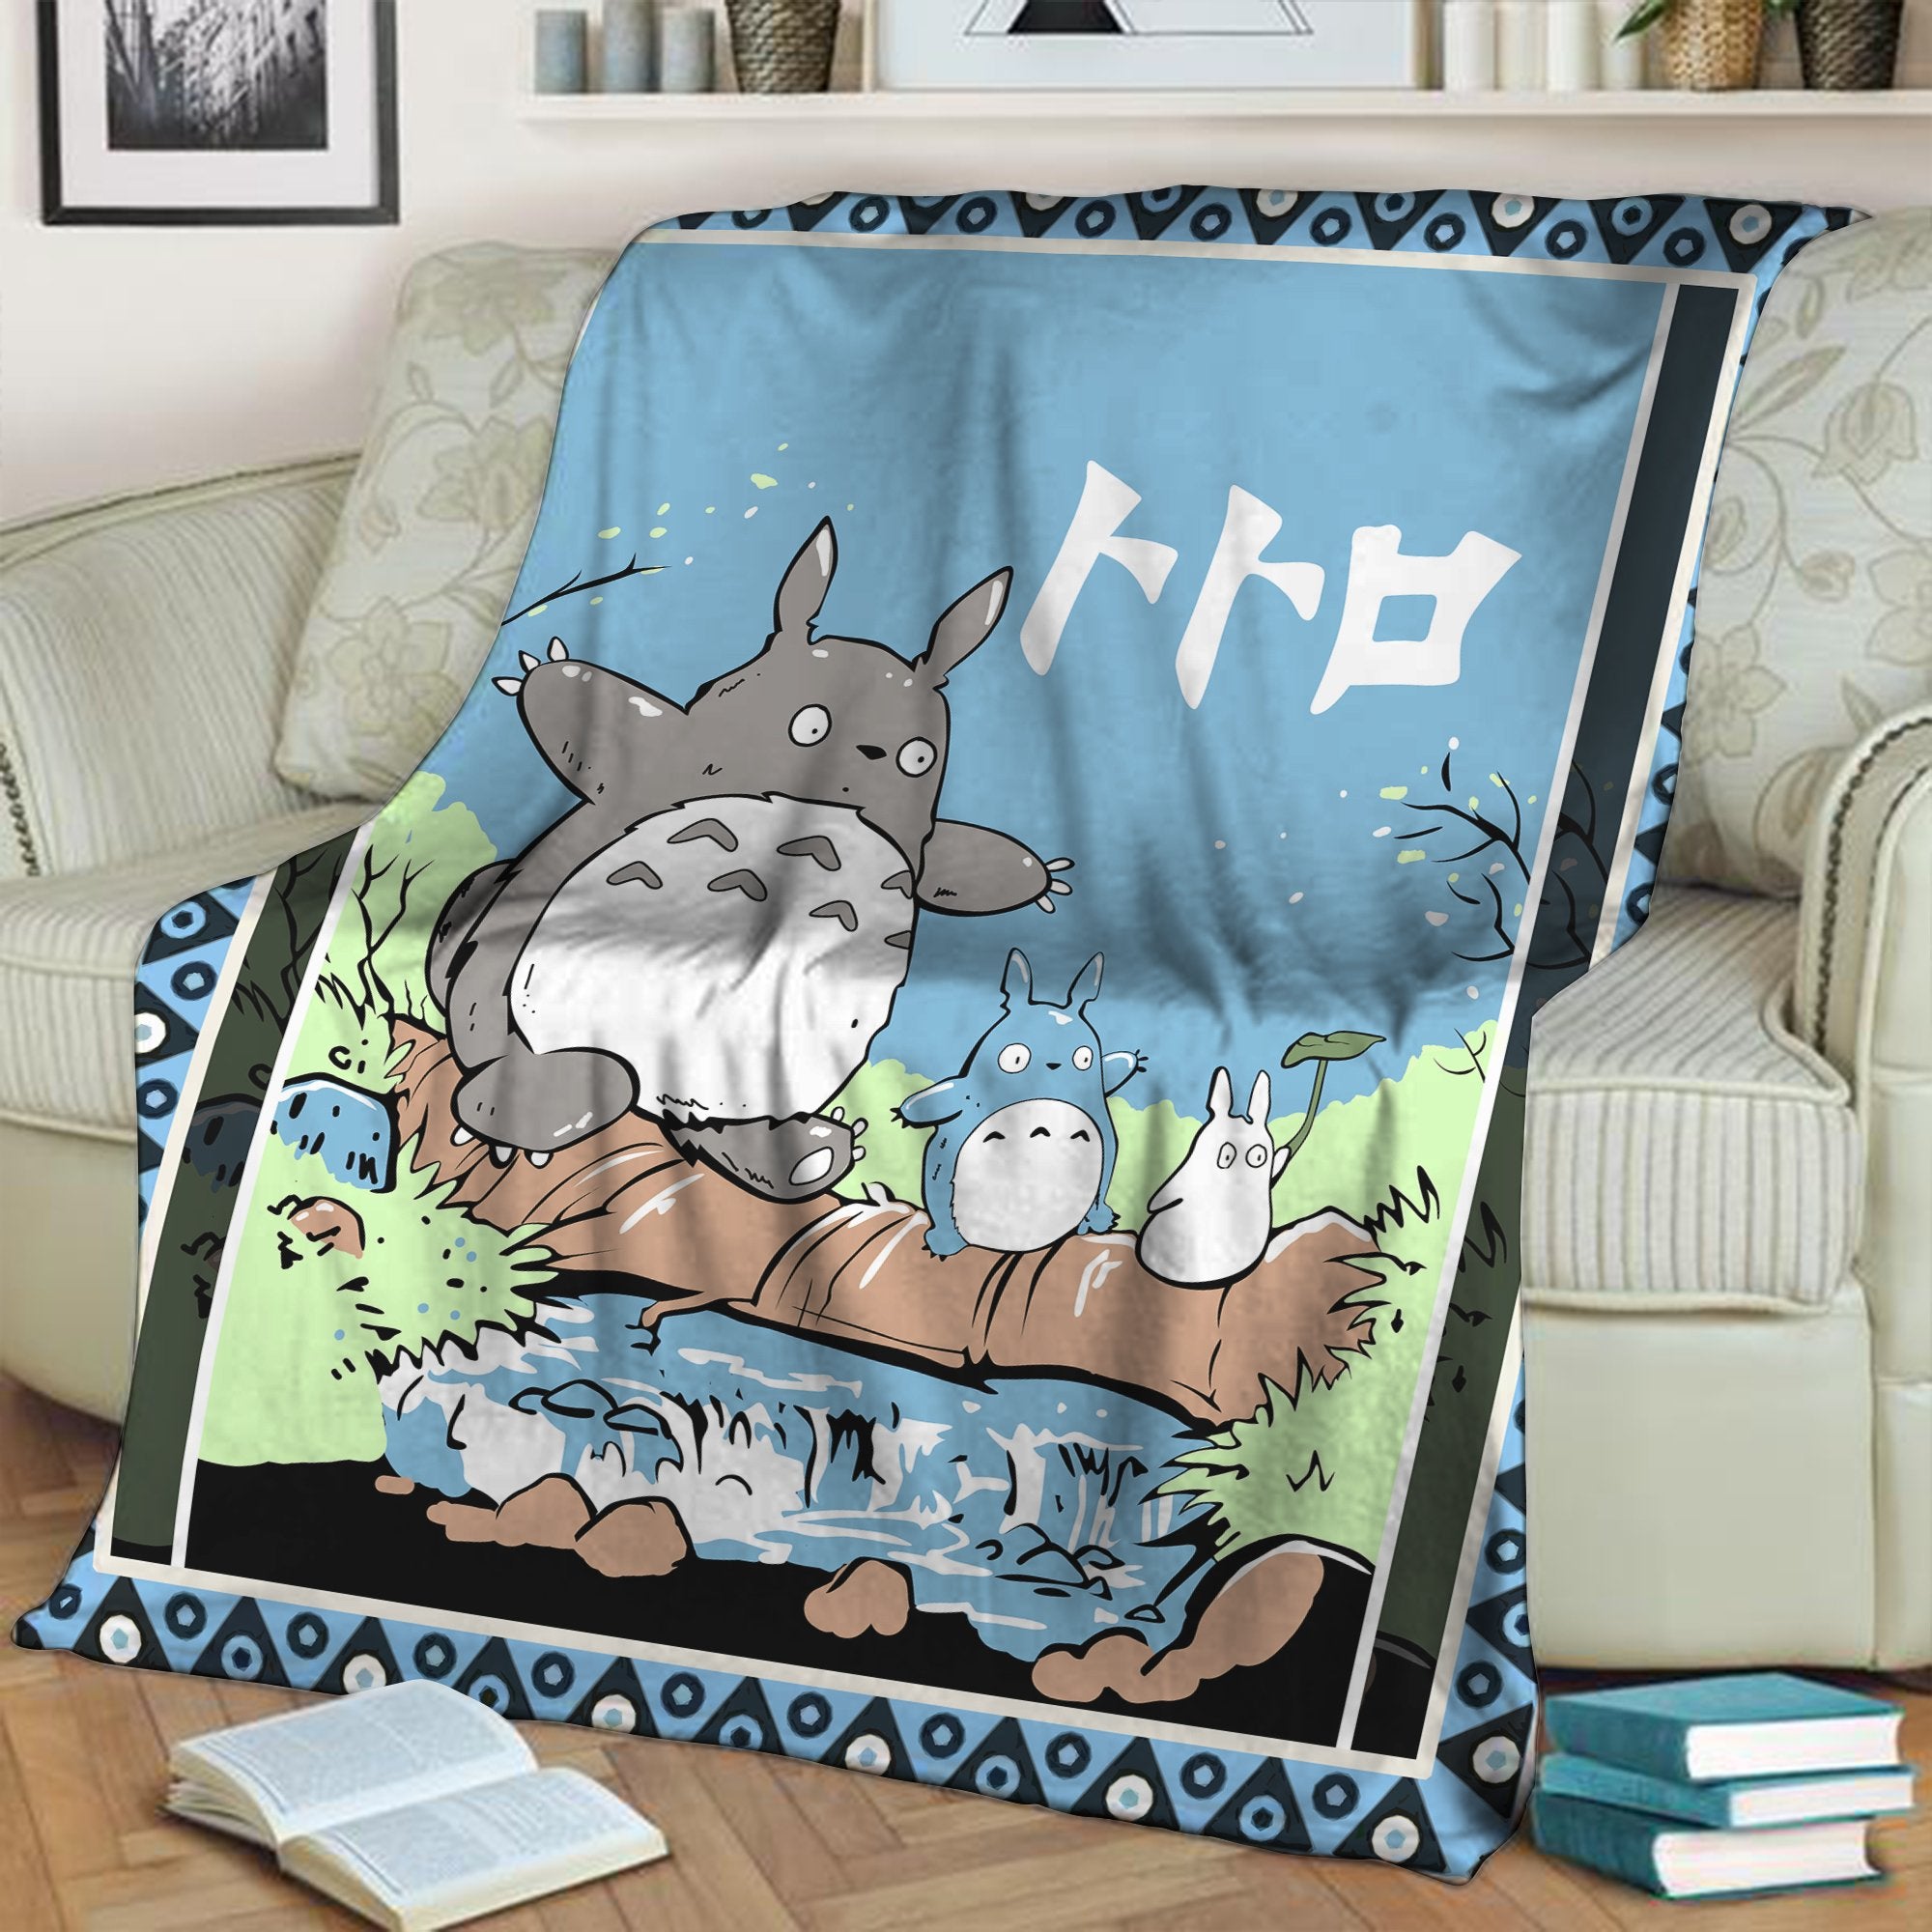 Totoro 3D Throw Blanket